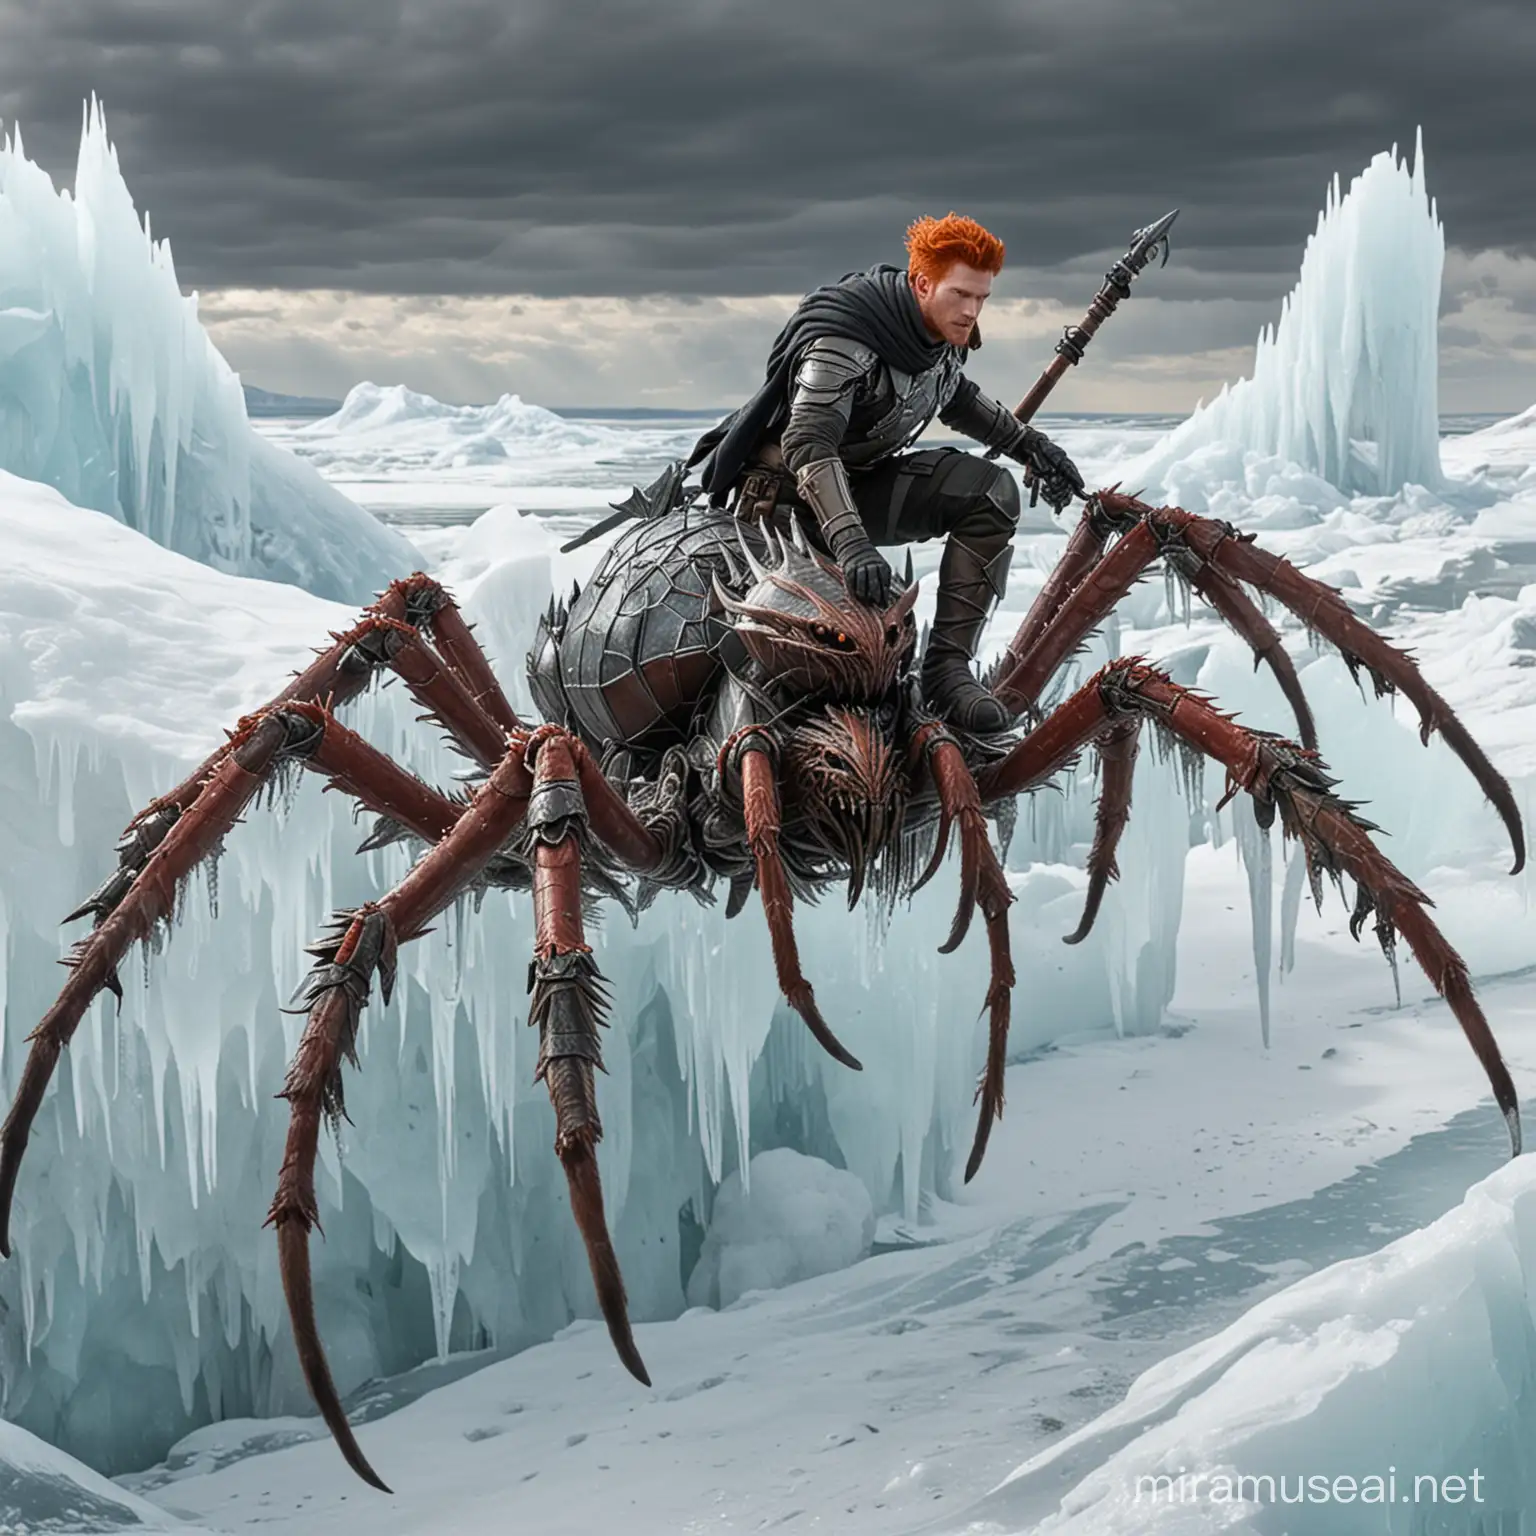 RedHaired Warrior in Armor Astride a Frosty Arachnid